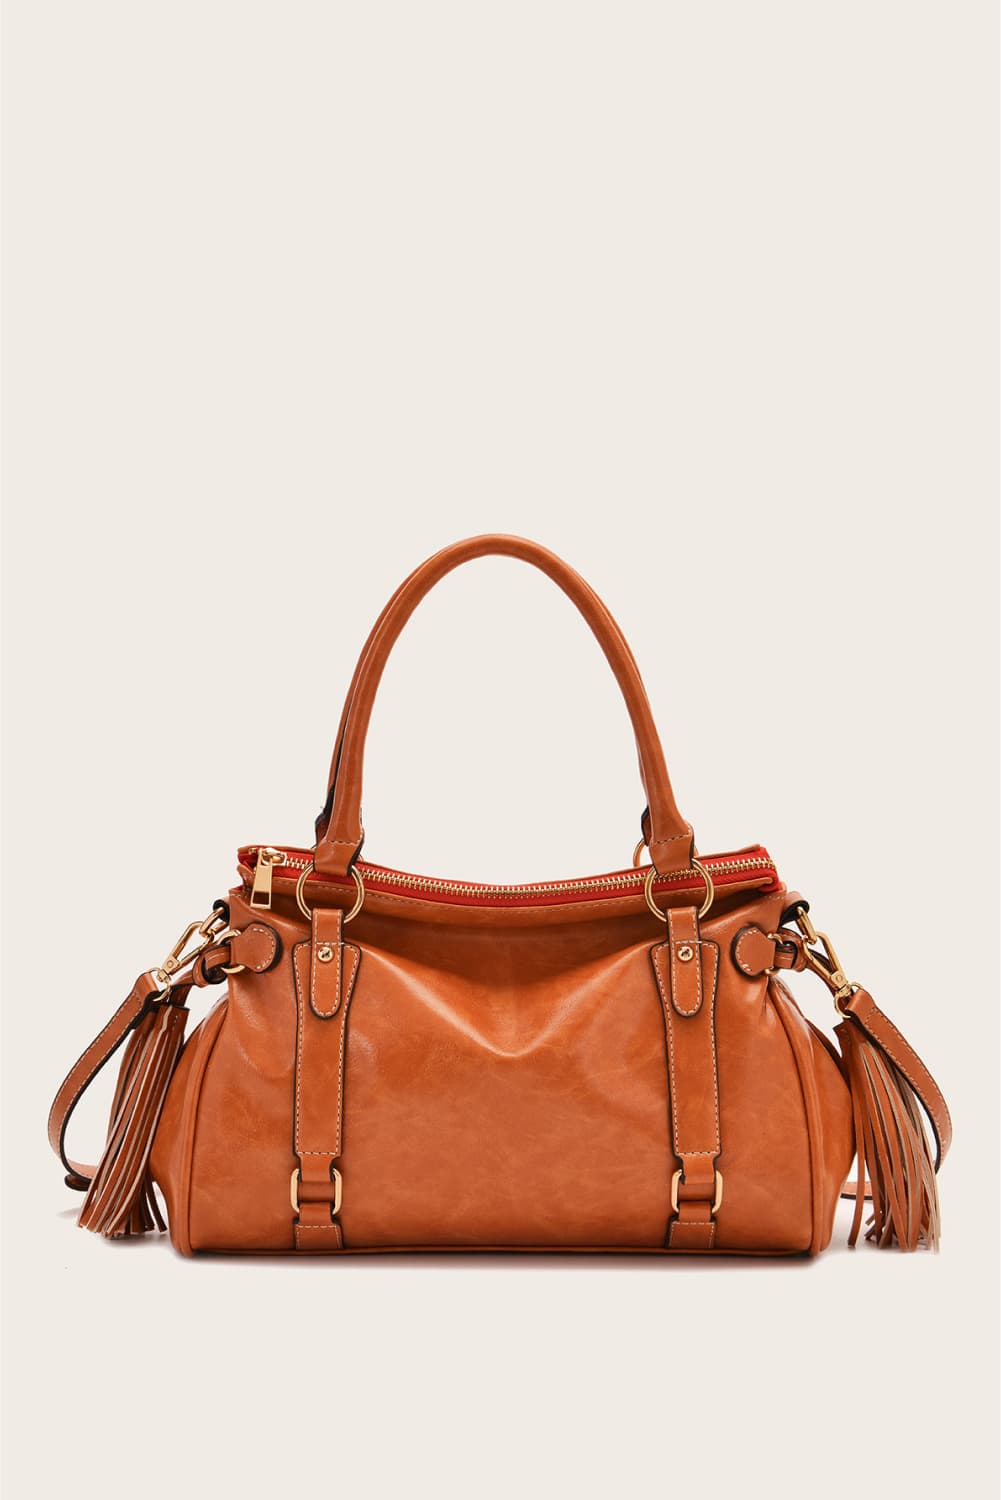 PU Leather Handbag - BloomBliss.com